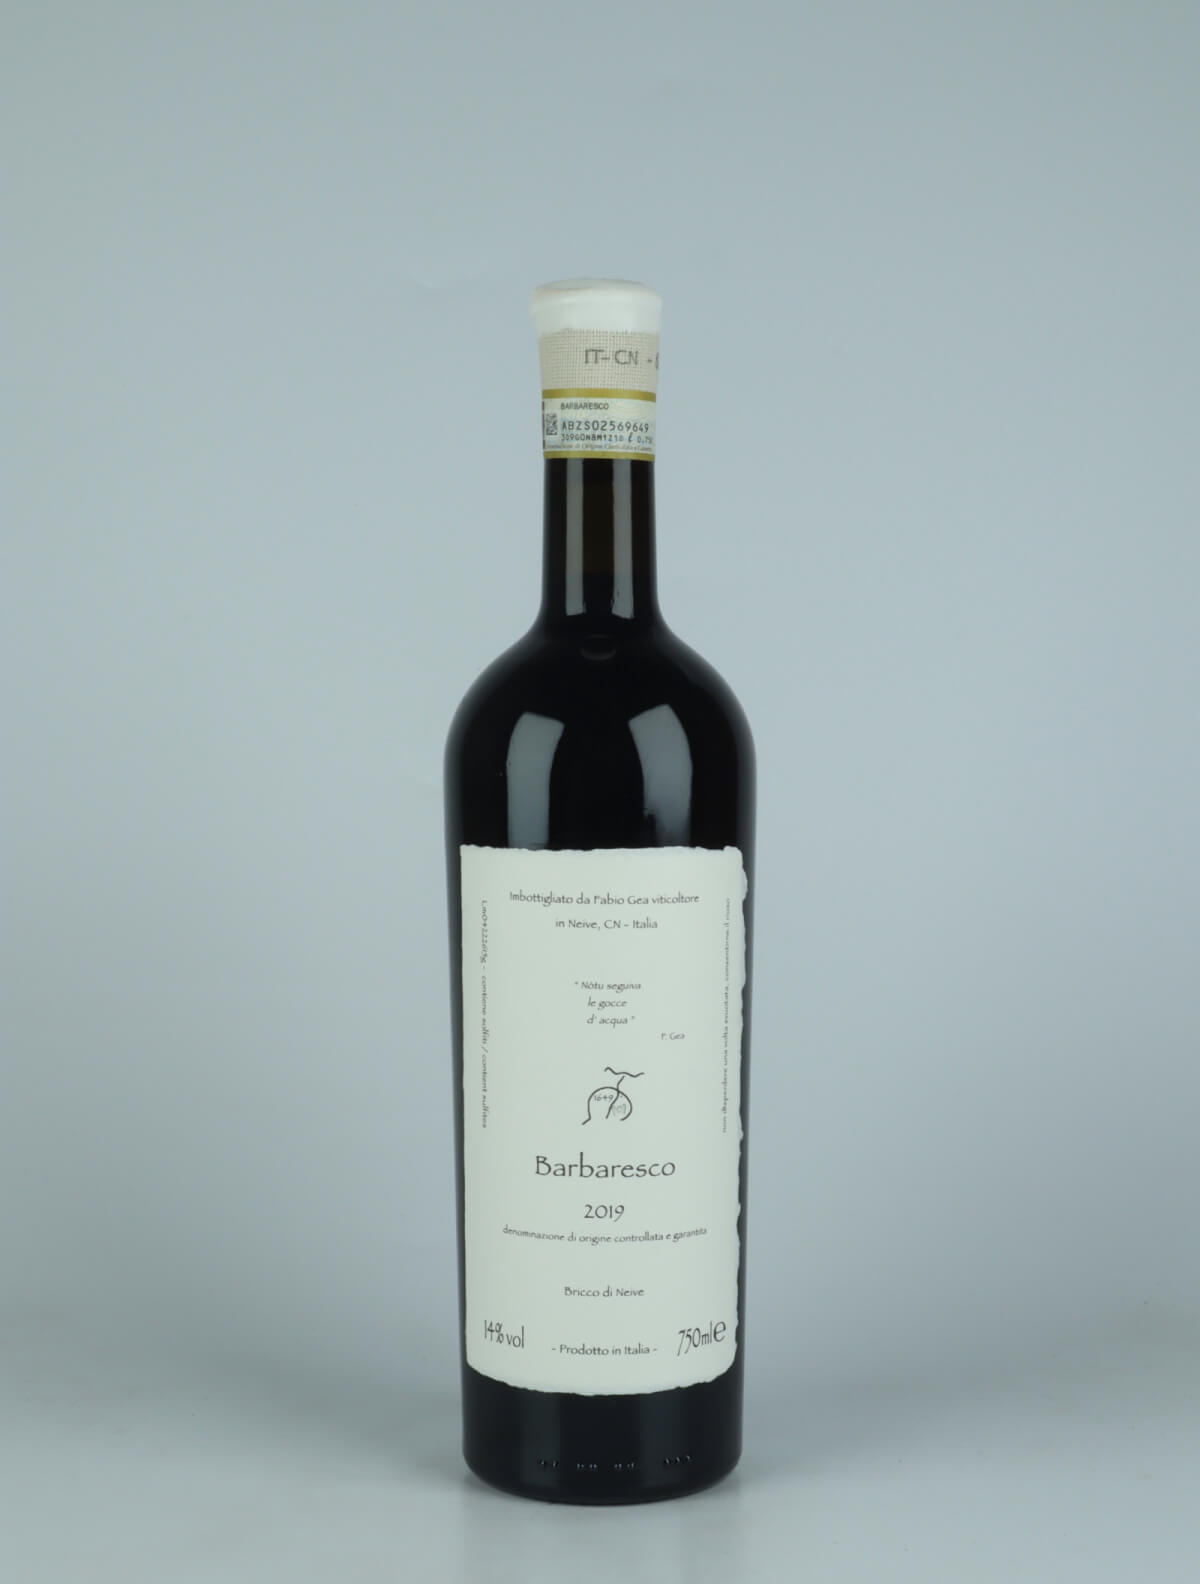 A bottle 2019 Barbaresco (Nòtu seguiva le gocce d'acqua) Red wine from Fabio Gea, Piedmont in Italy